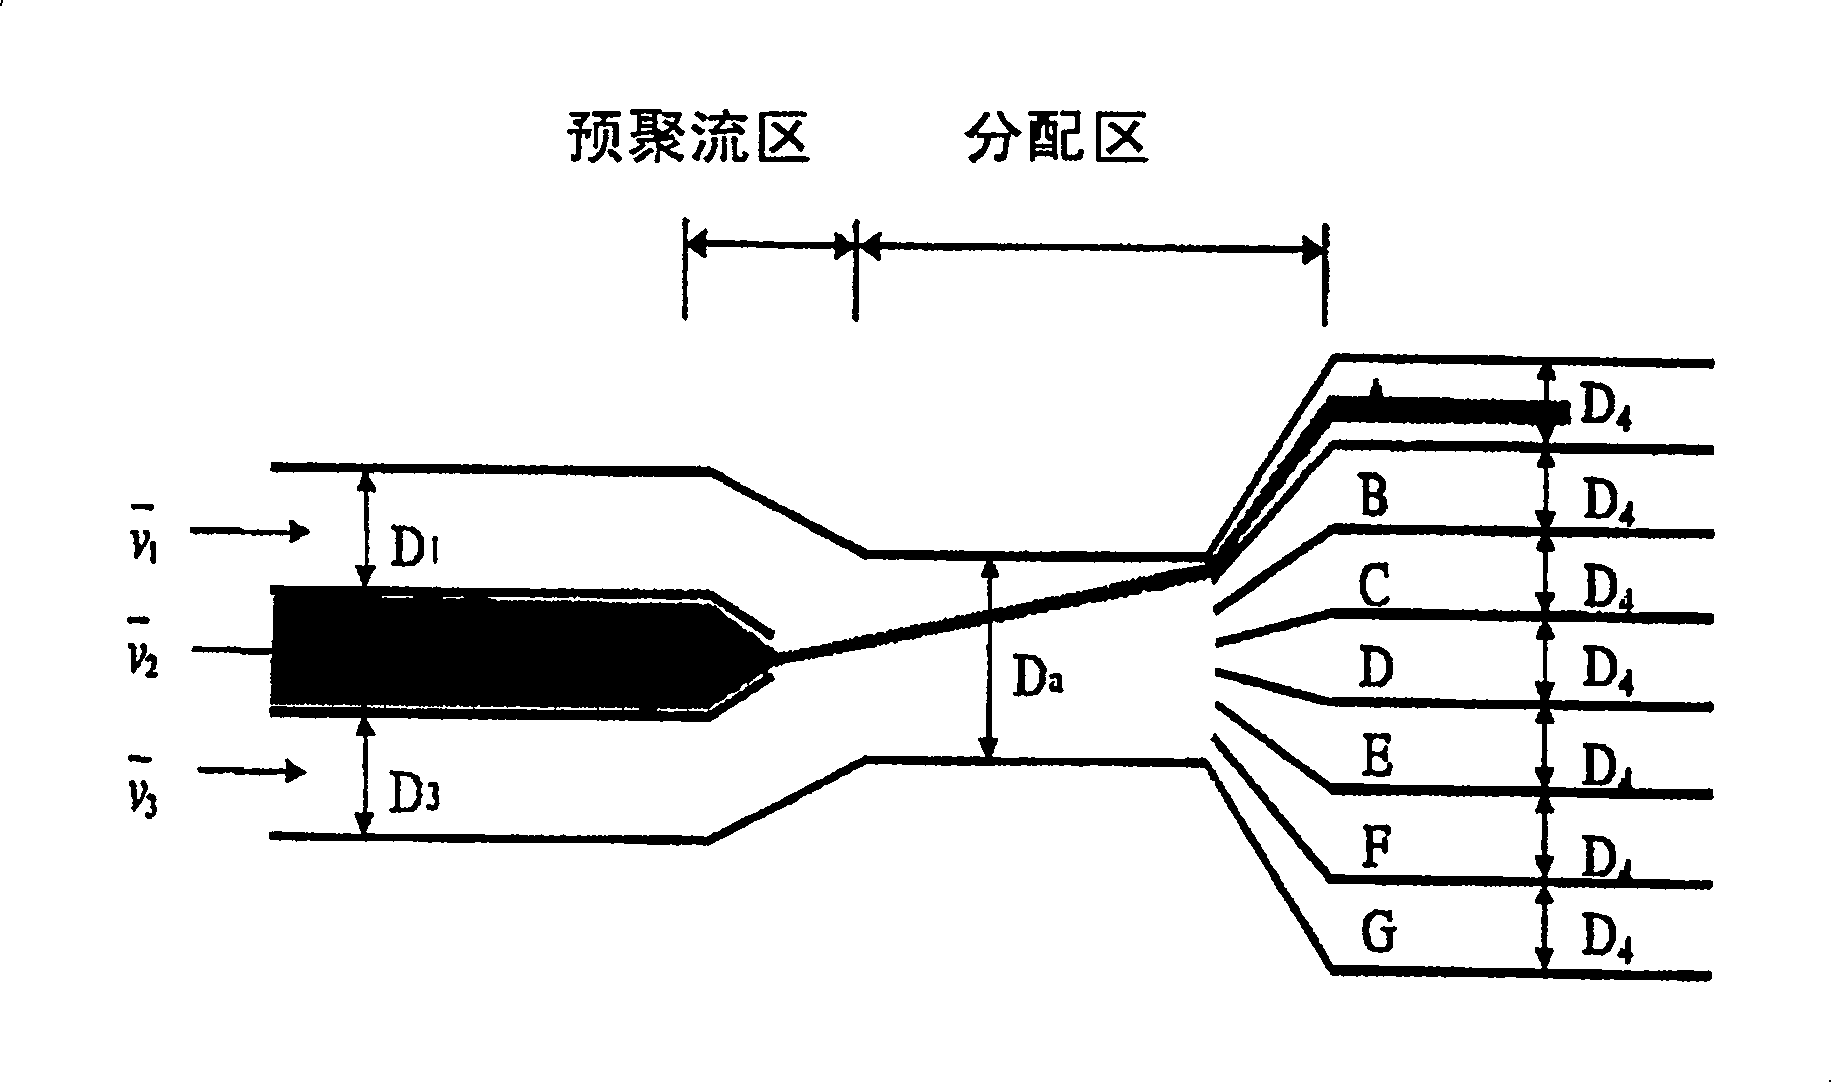 Micro-domain fluid covering-ratio control device